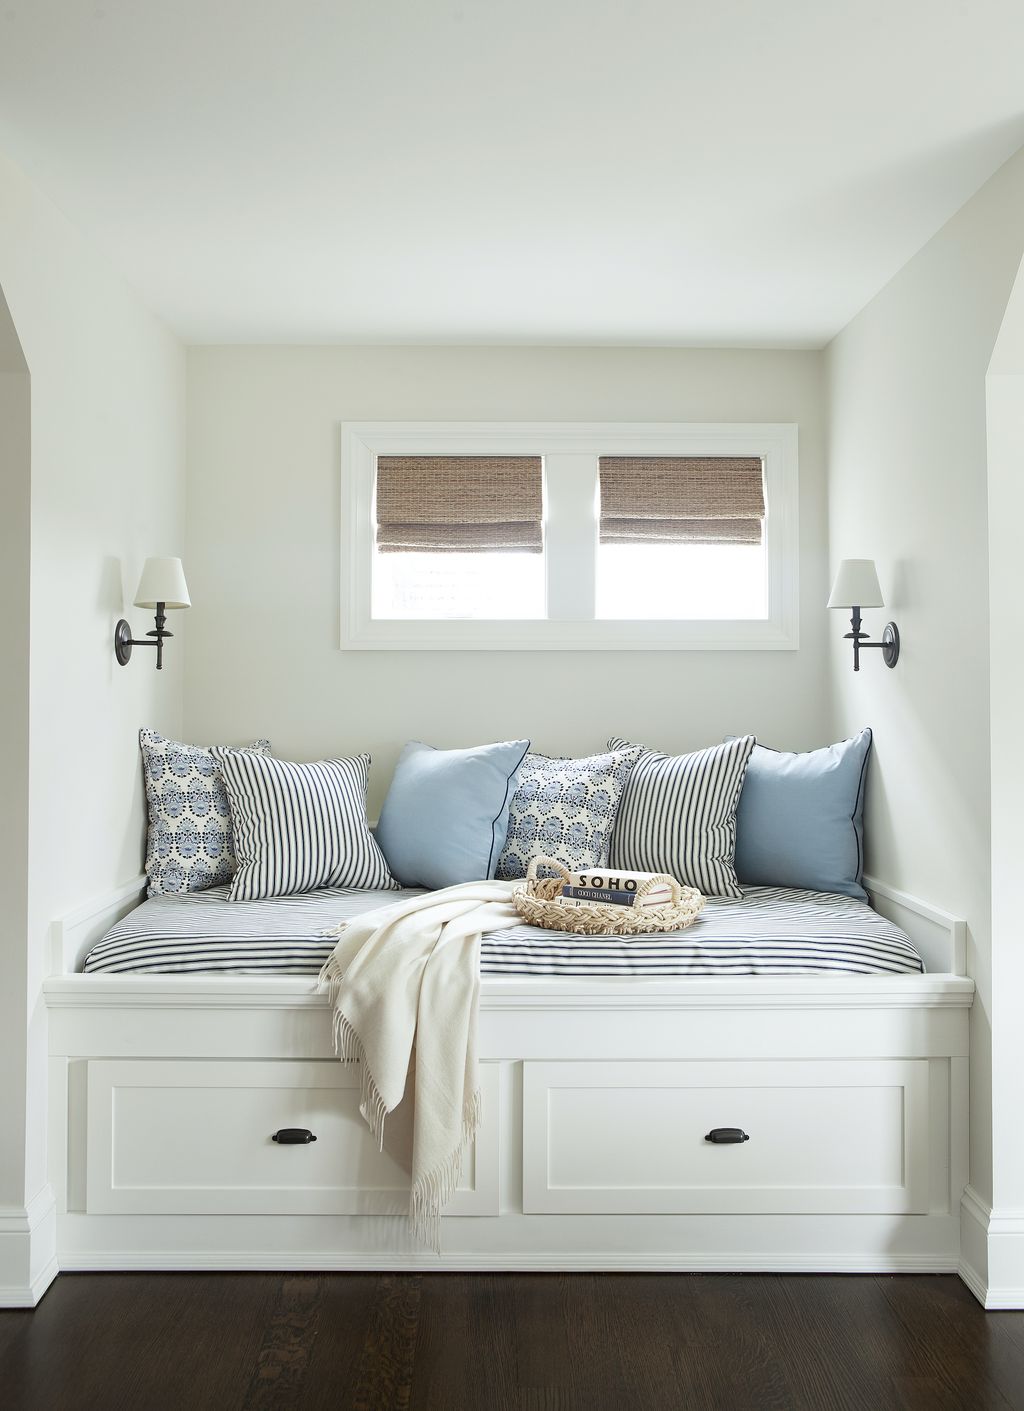 Interior designers are embracing a brand new bedroom trend | Livingetc